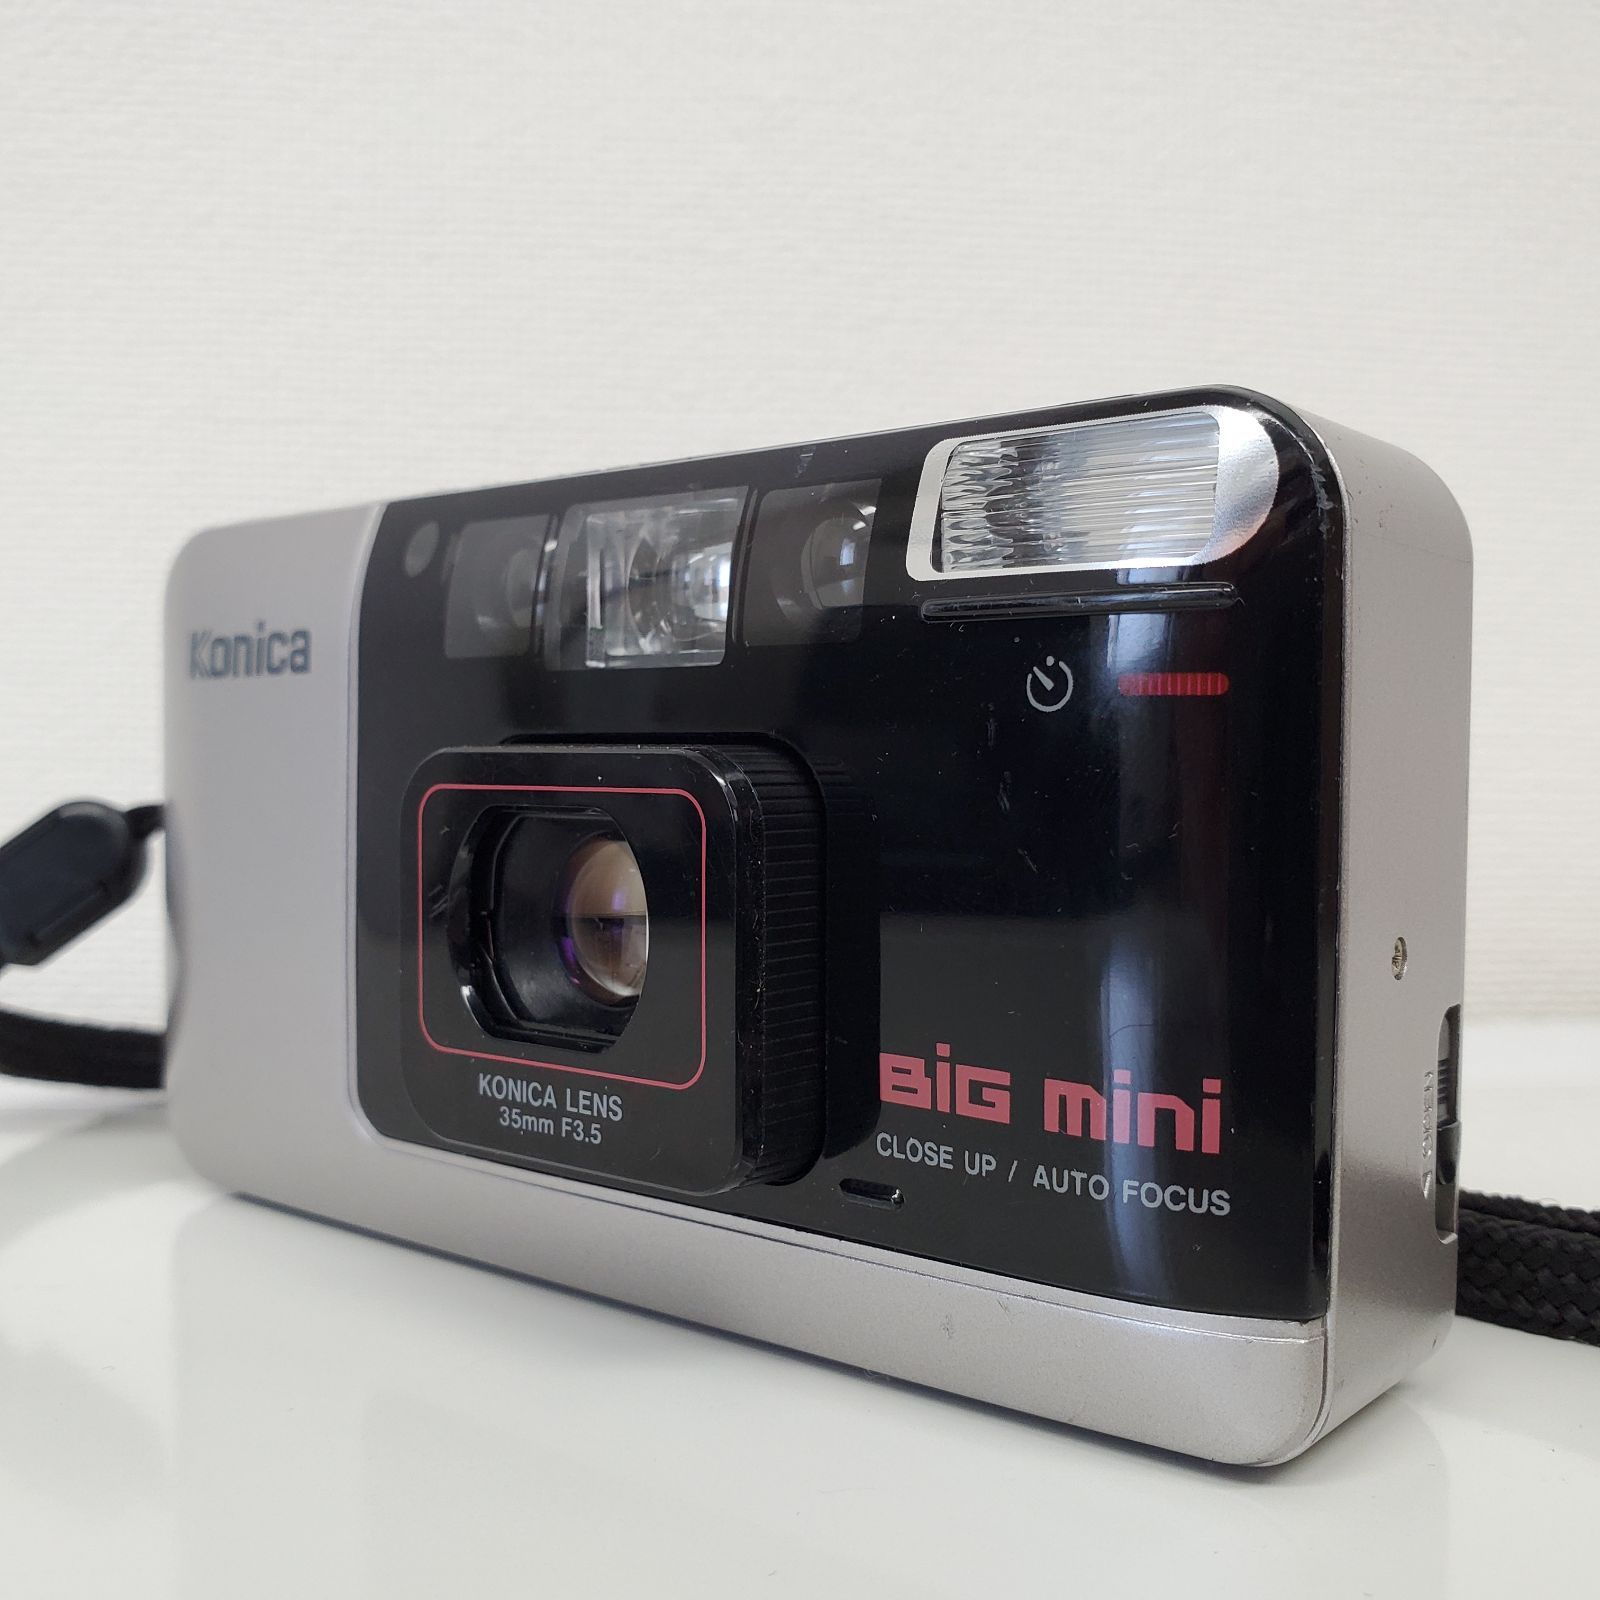 Konica big mini A4 フィルムカメラ - フィルムカメラ